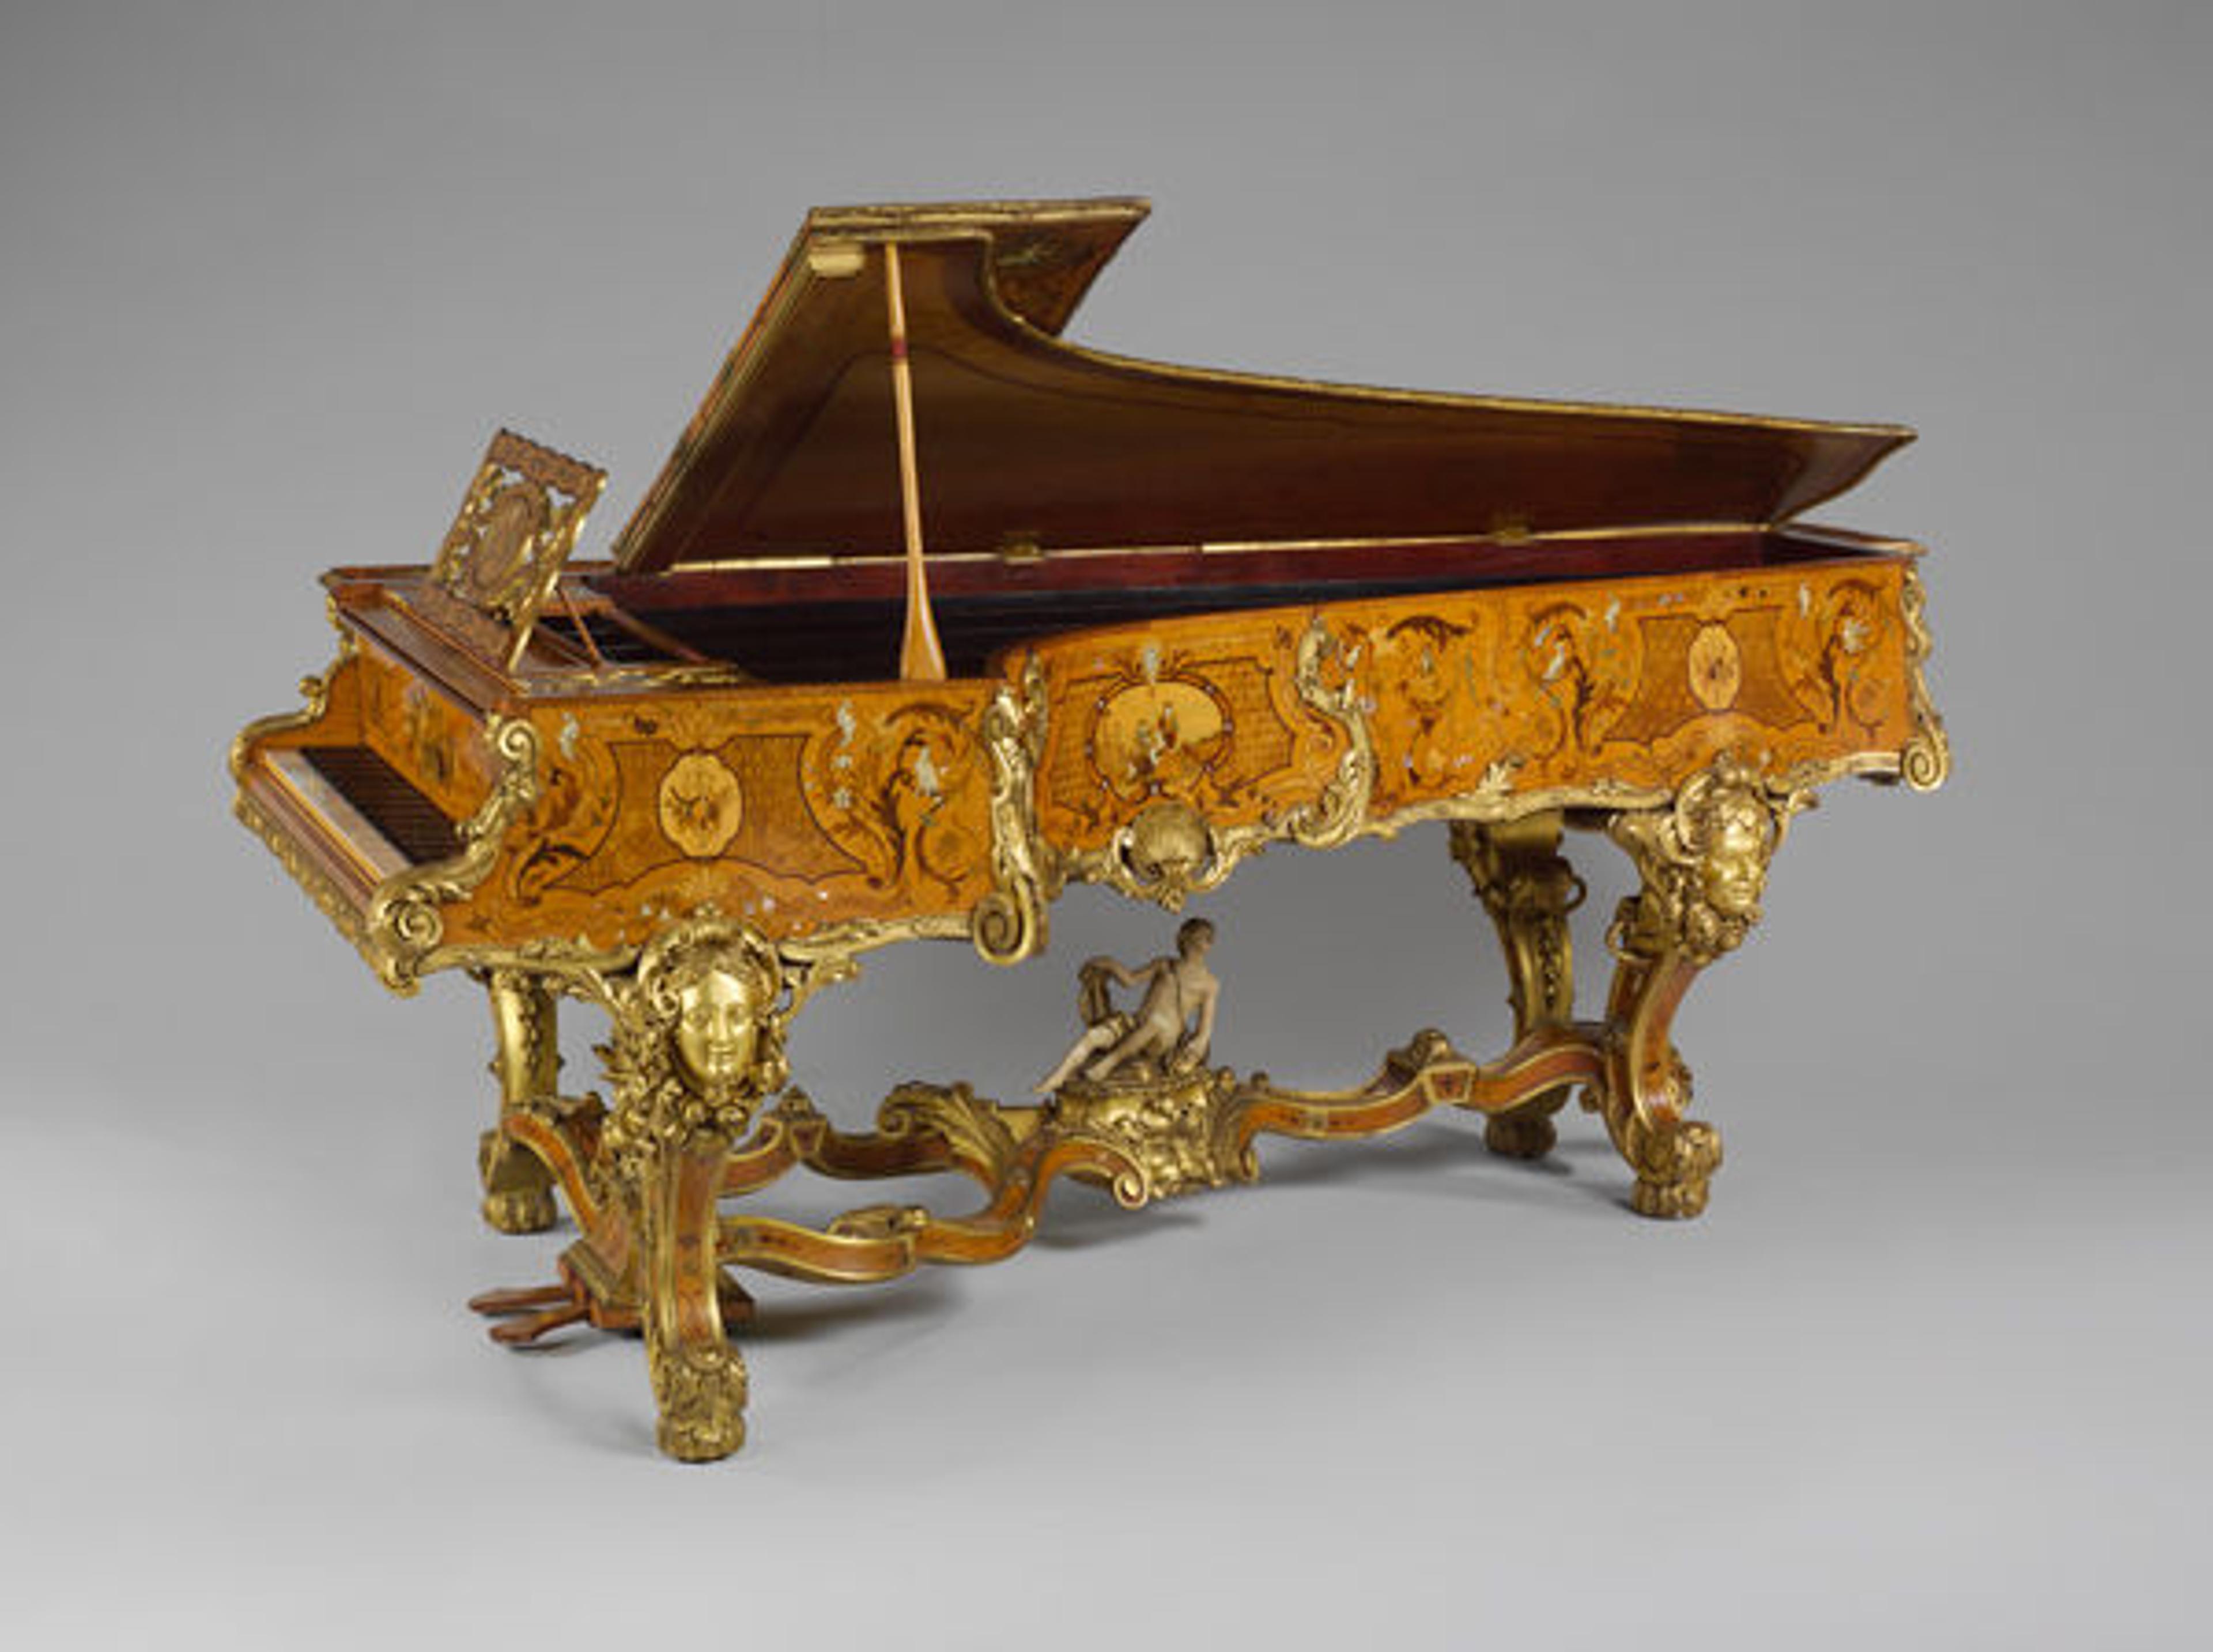 Grand pianoforte, ca. 1840. Erard & Co., London, England, United Kingdom. Wood, various metals. The Metropolitan Museum of Art, New York, Gift of Mrs. Henry McSweeney, 1959 (59.76)